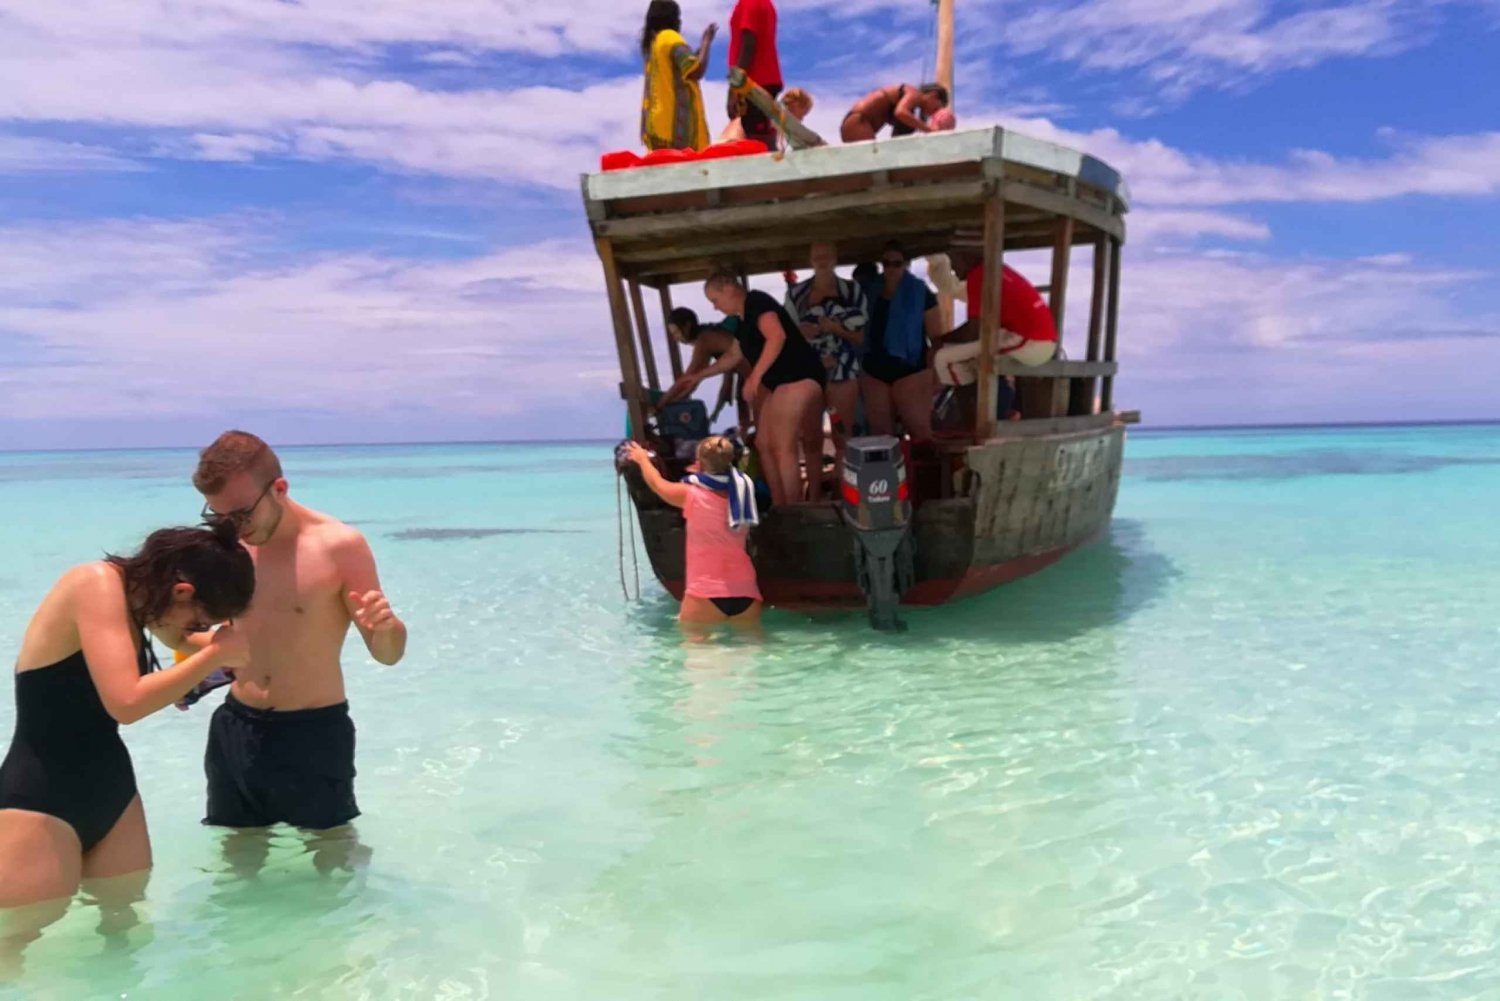 Zanzibar : Kendwa/Nungwi sunsite dhow Cruise